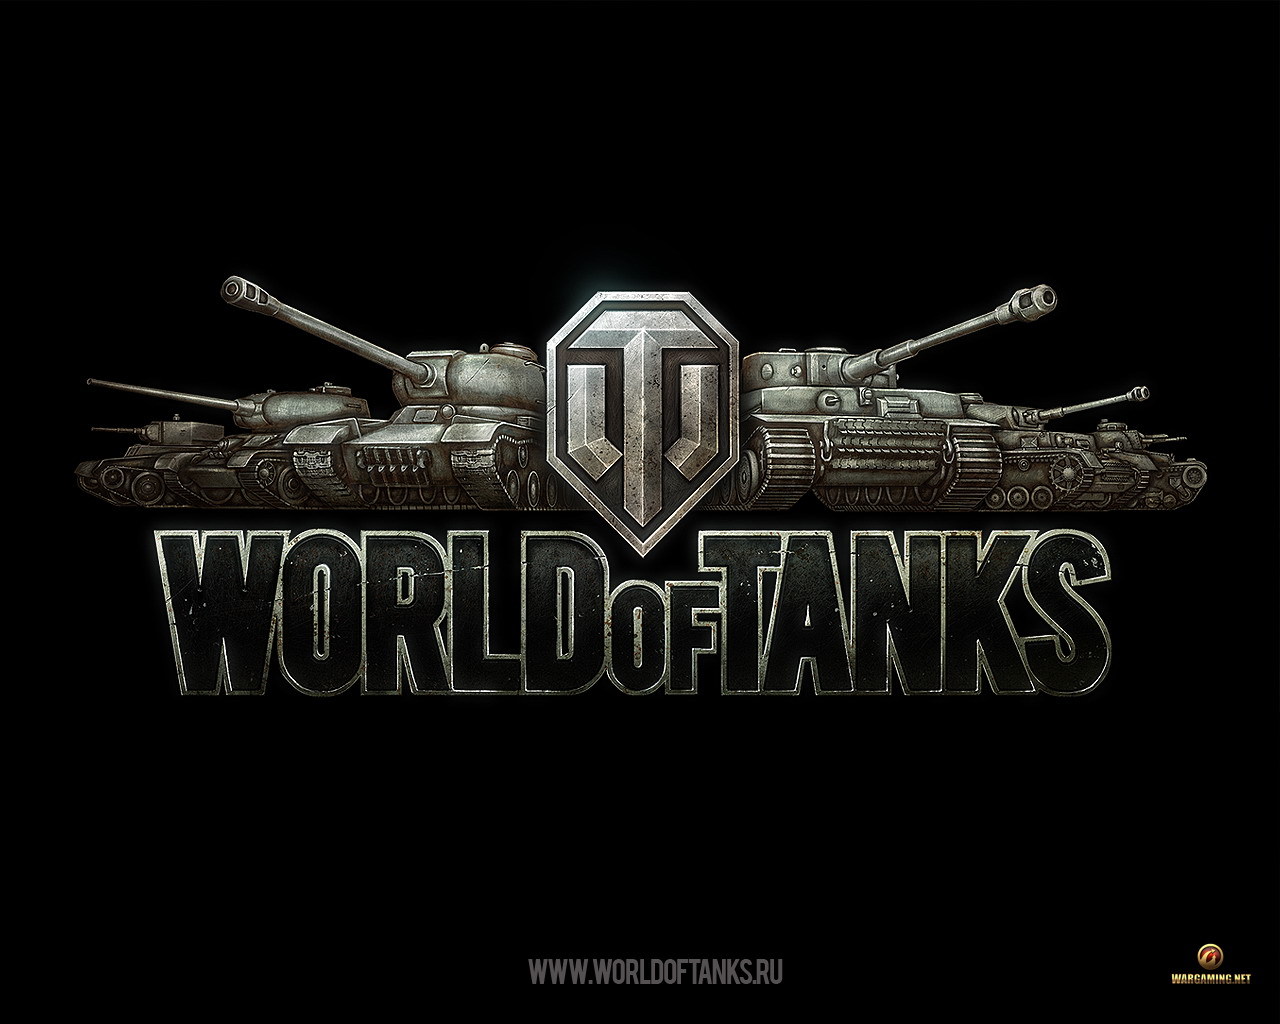 world of tanks, games, background, logos, black Full HD